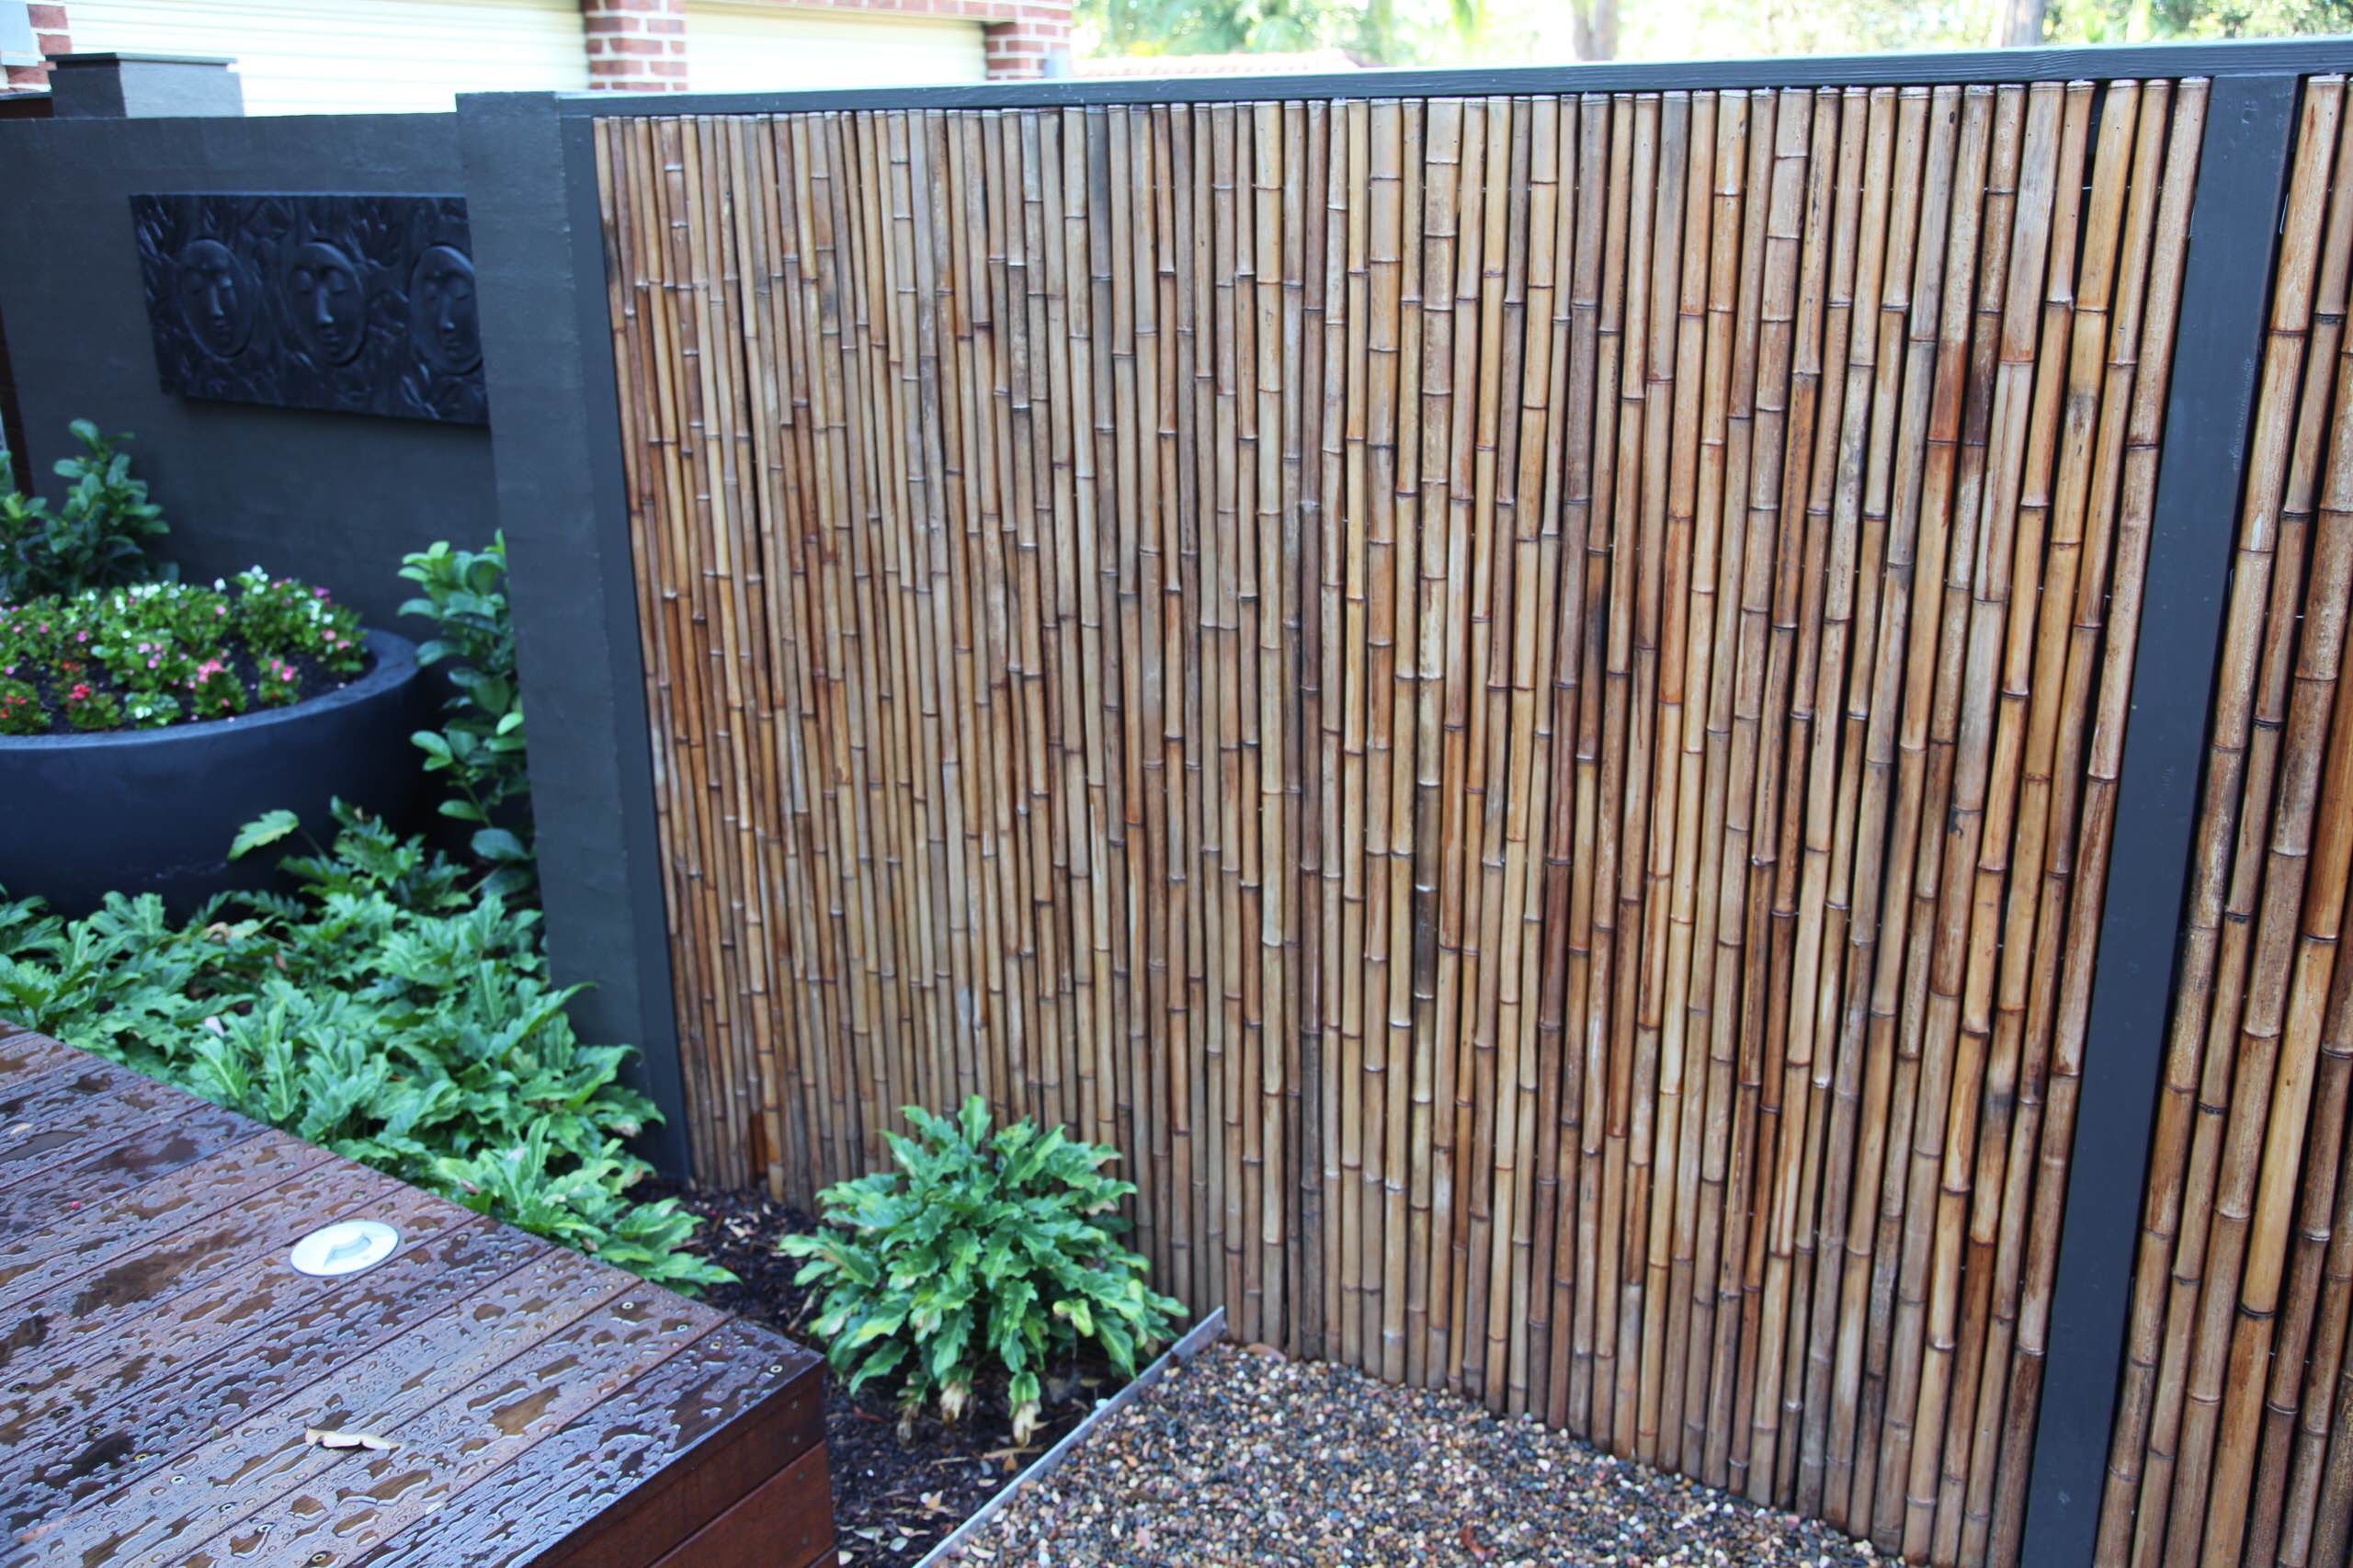 Bamboo Privacy Fence - Photos & Ideas | Houzz